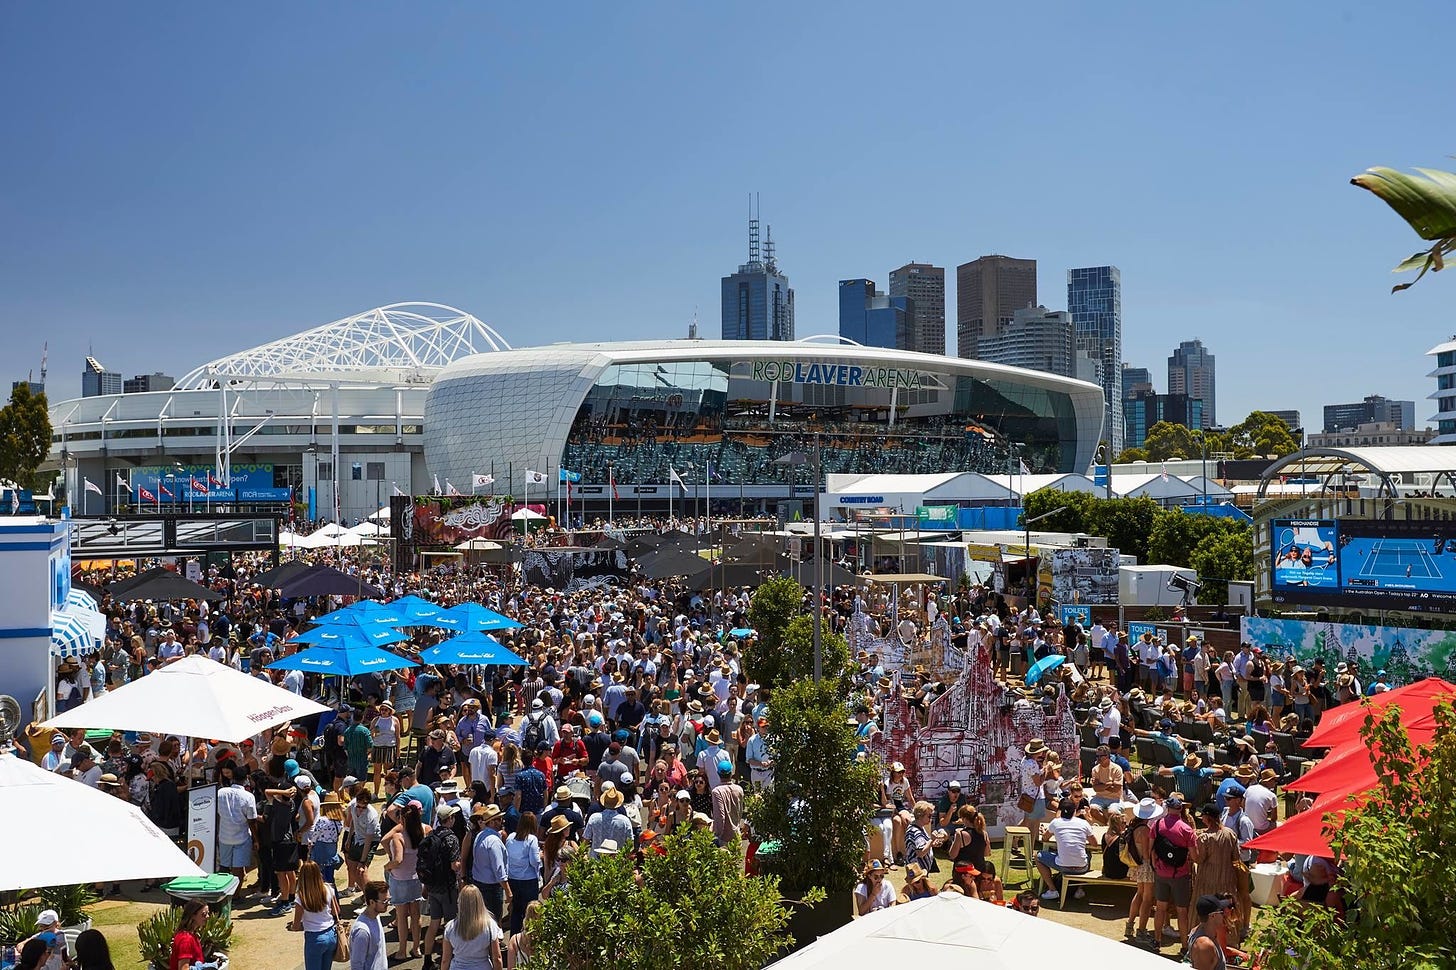 Tennis Australia: Culture | LinkedIn